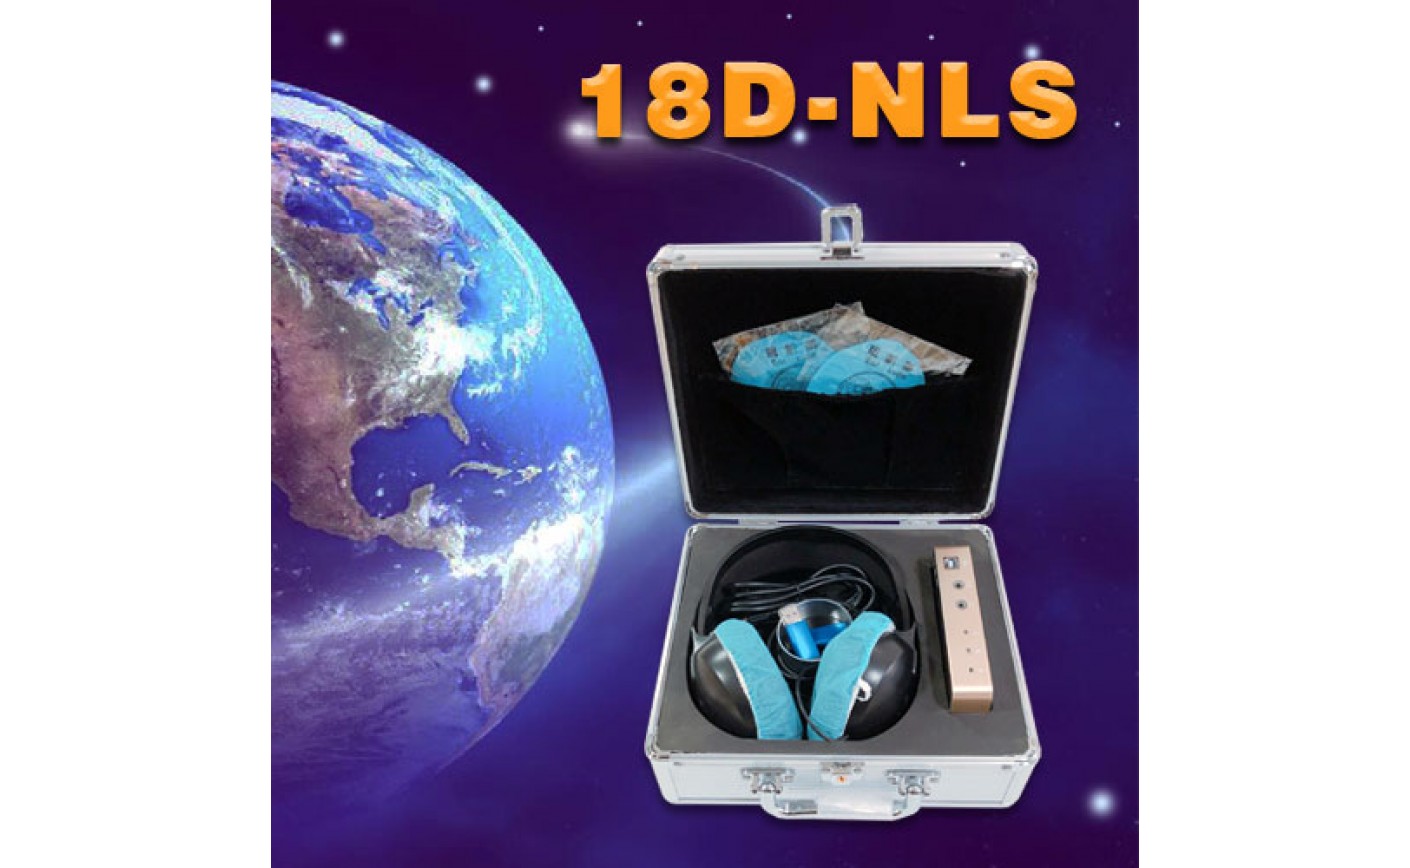 The 18D NLS’s Bioresonance Technology